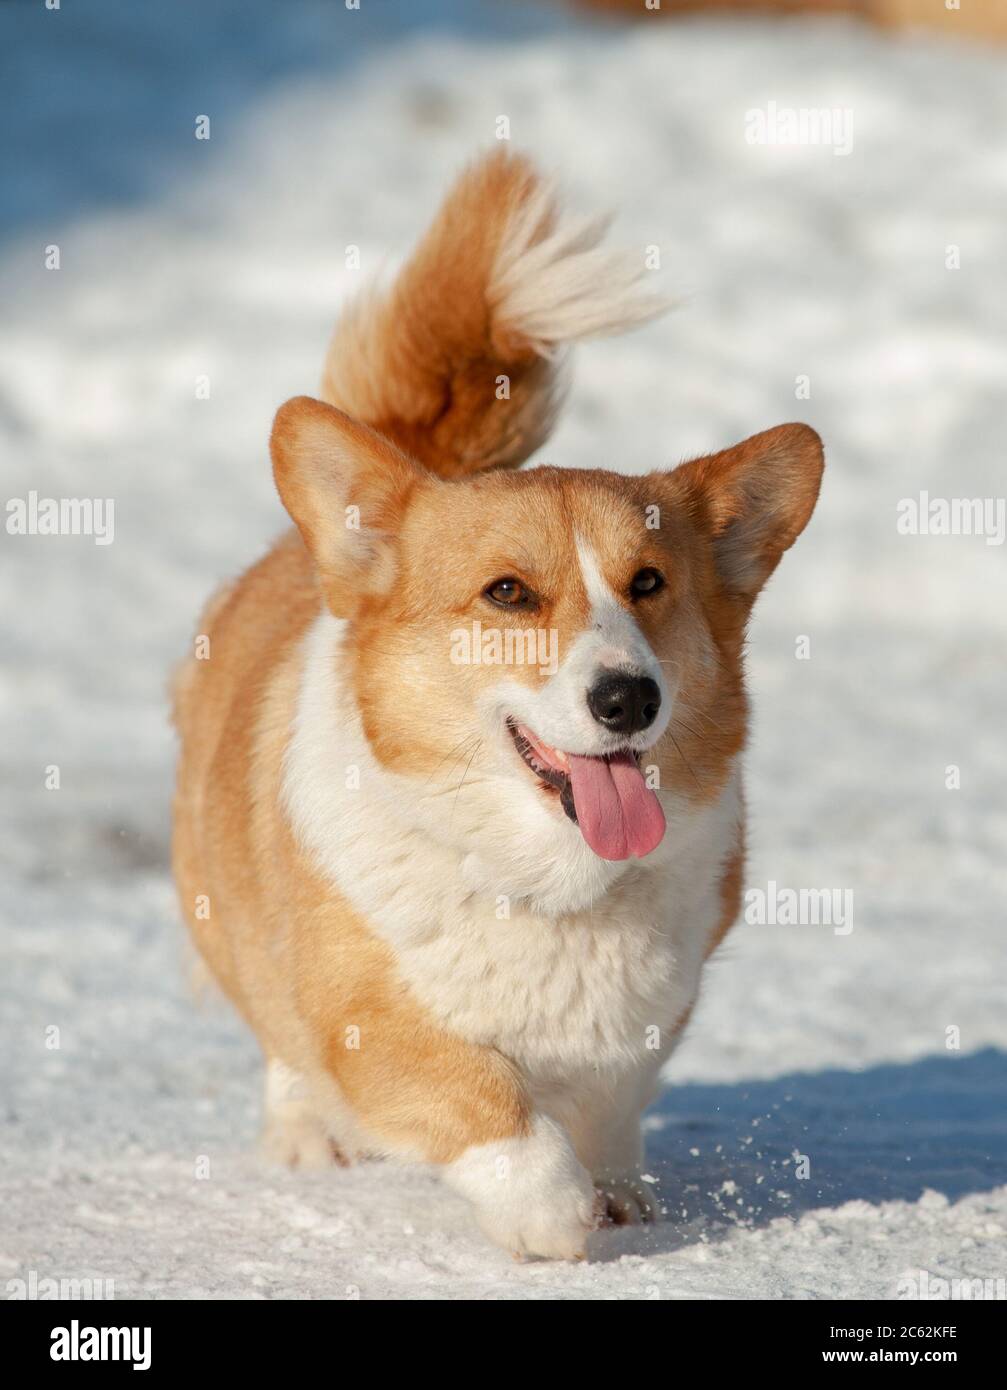 Gallese corgi pembtoke cane in inverno Foto Stock